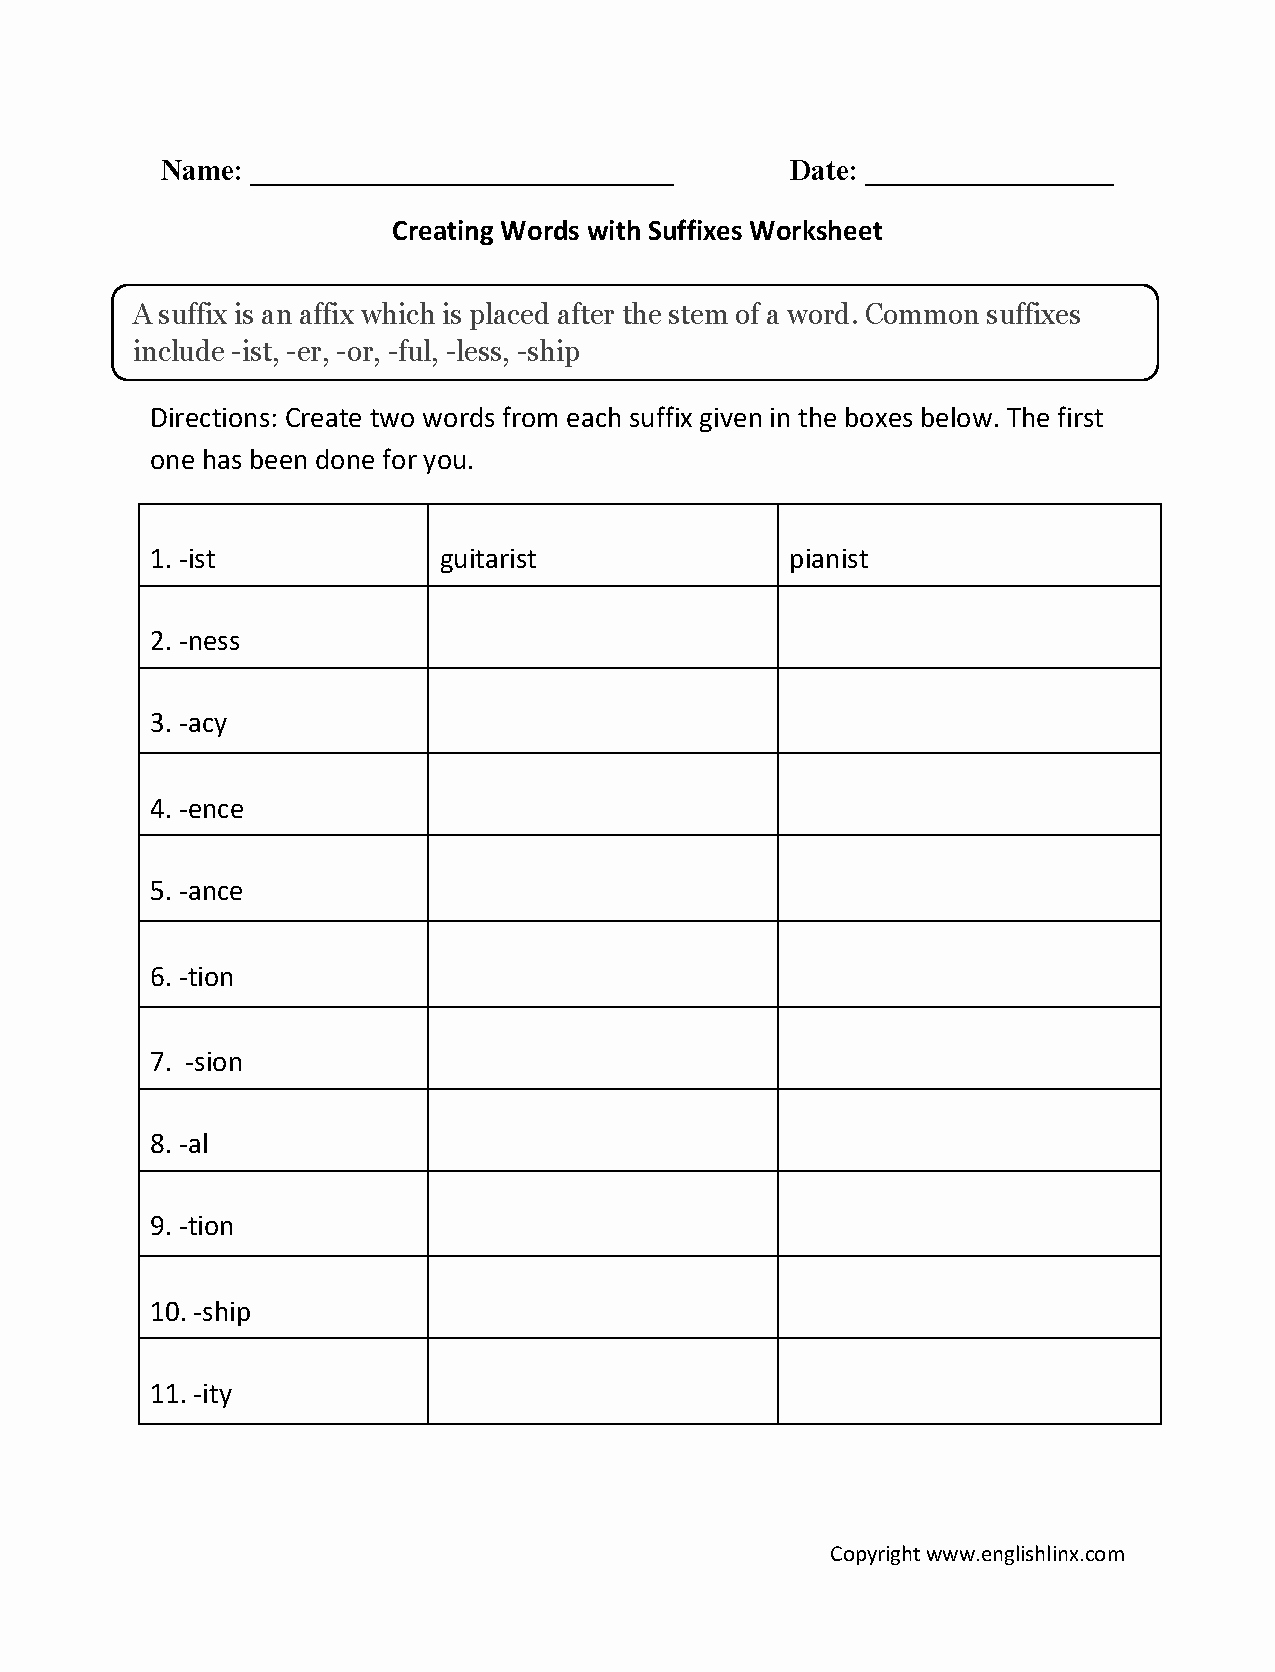 Free Suffix Worksheet Elegant Suffixes Worksheets